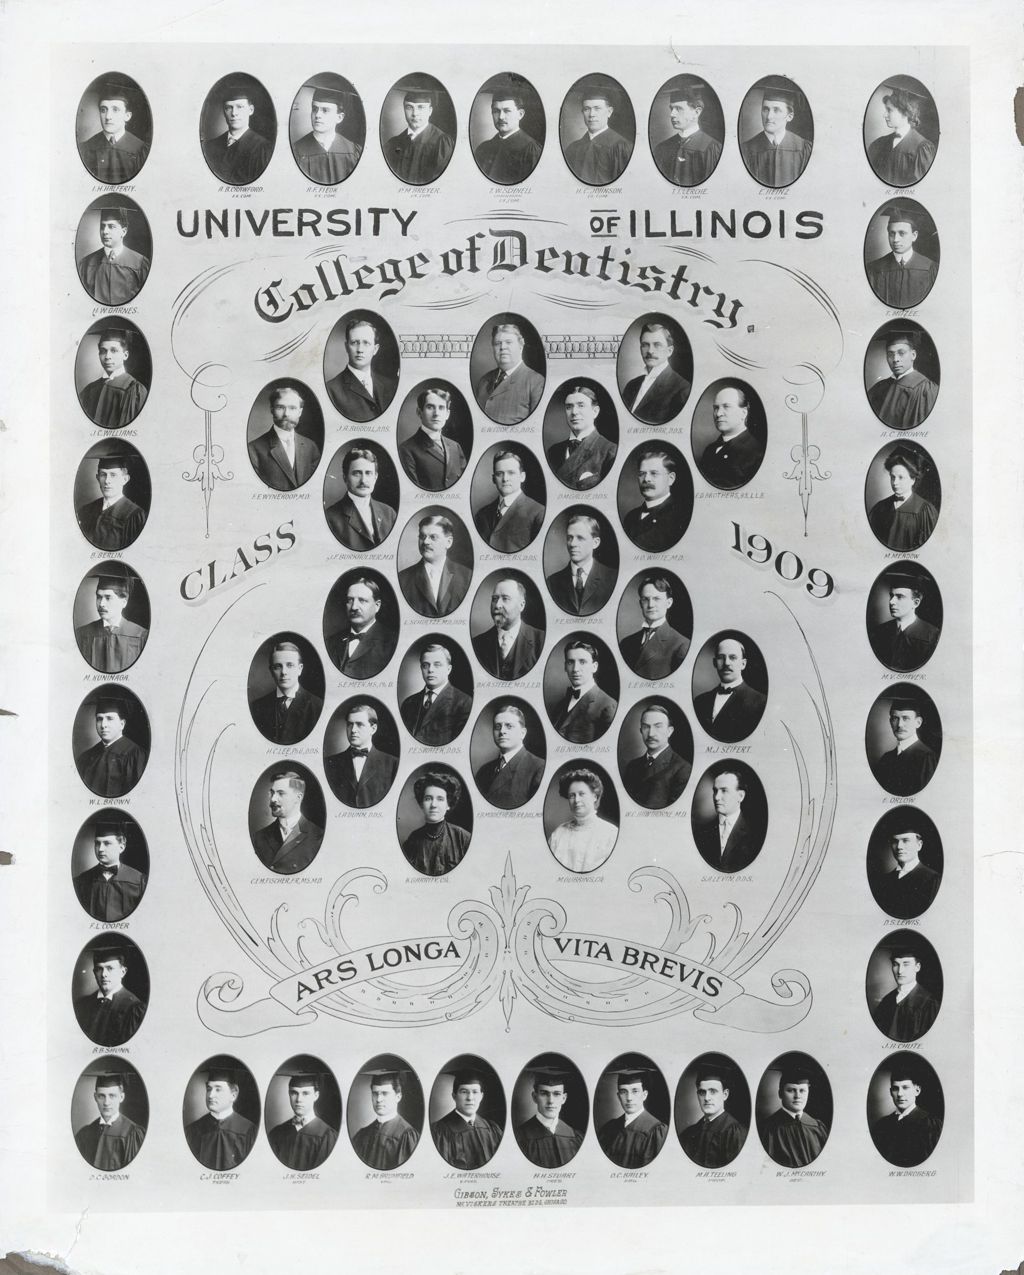 Miniature of 1909 graduating class, University of Illinois College of Dentistry